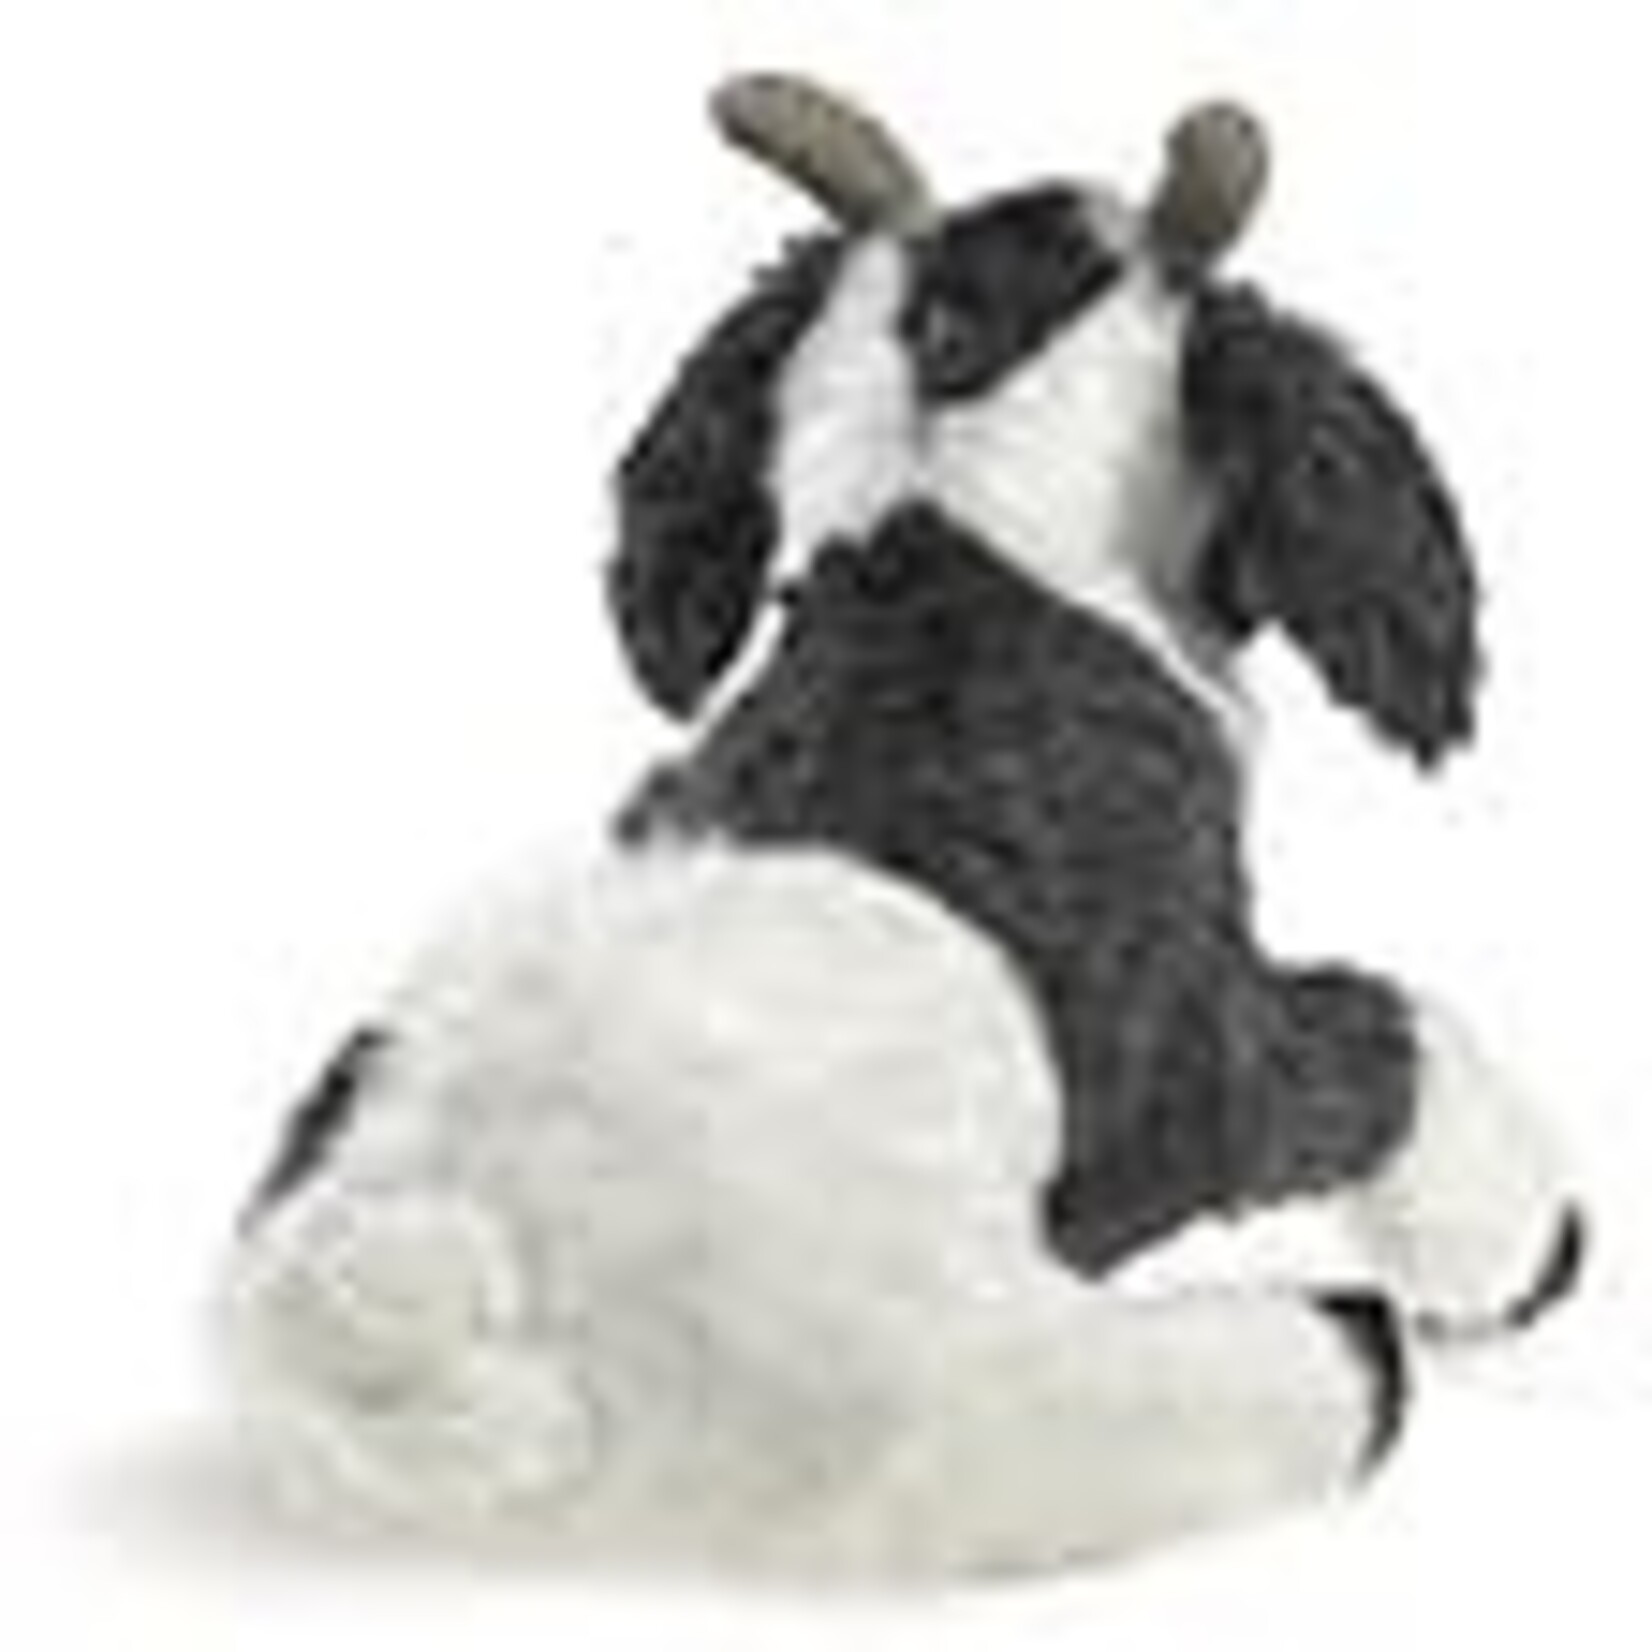 Goat Folkmanis Puppet